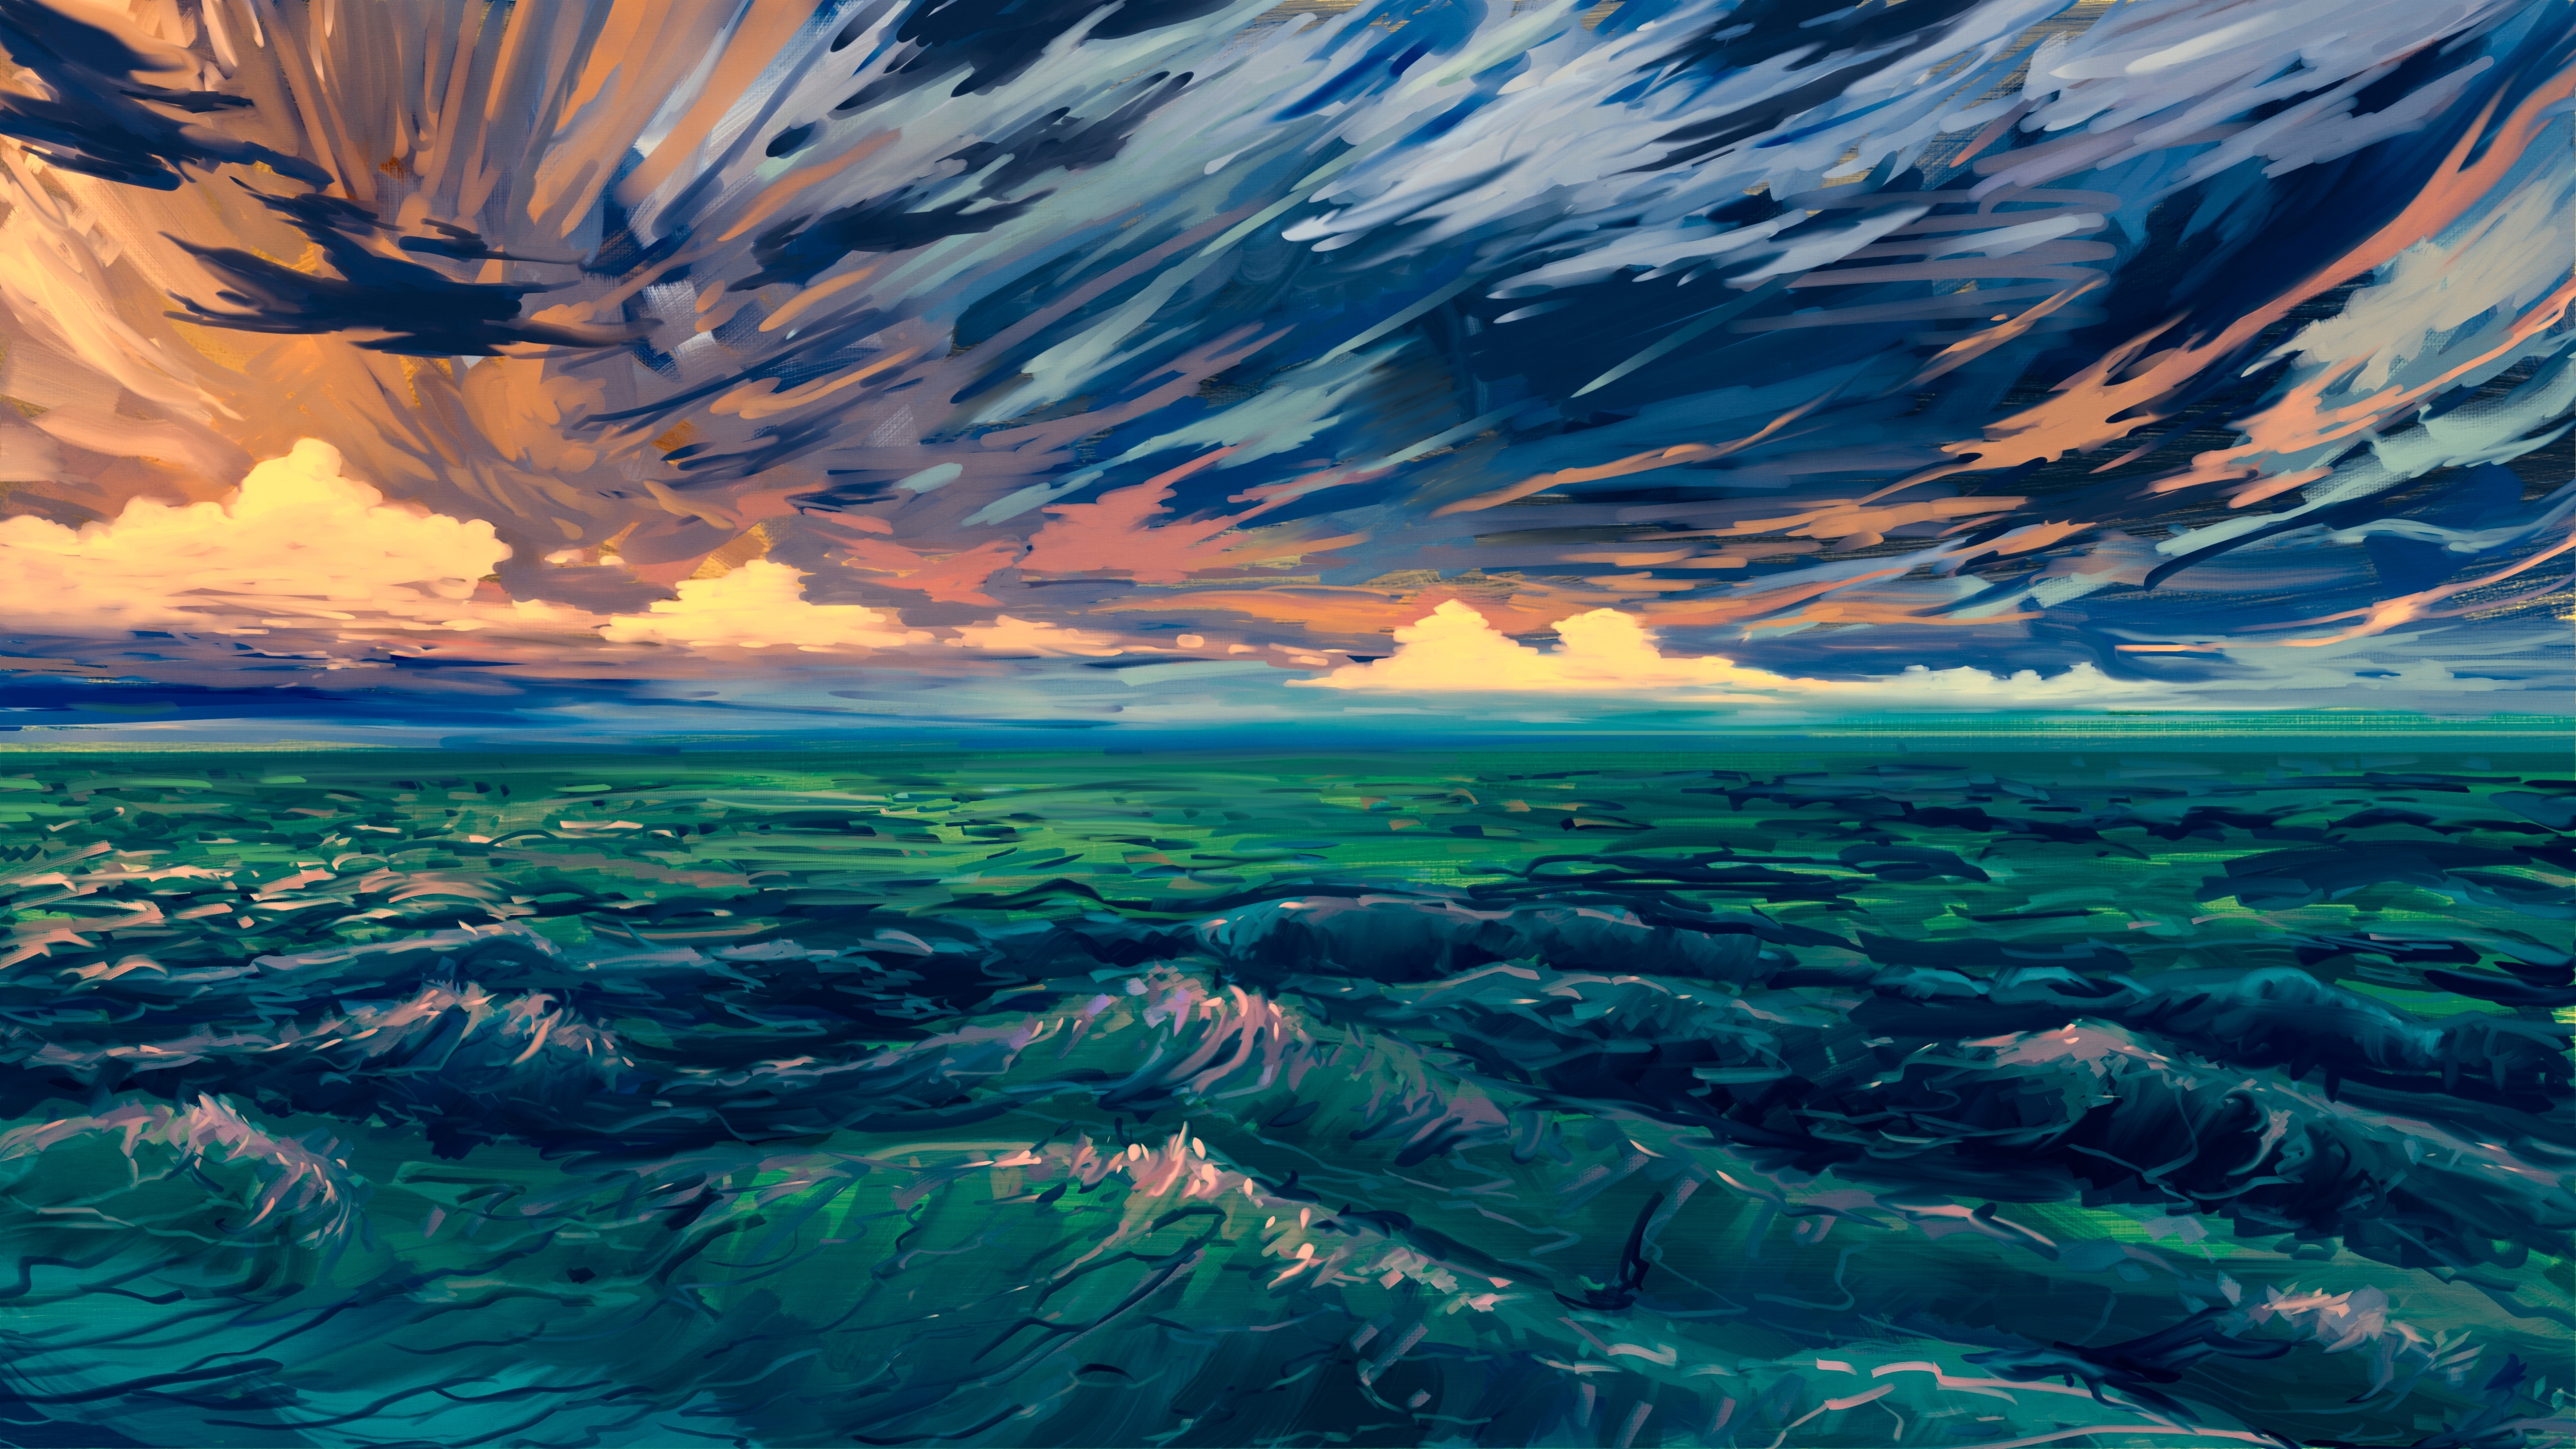 Digital Art Digital Painting Sea Hangmoon Sky Sunlight Water Waves Clouds Nature Outdoors DeviantArt 4000x2250